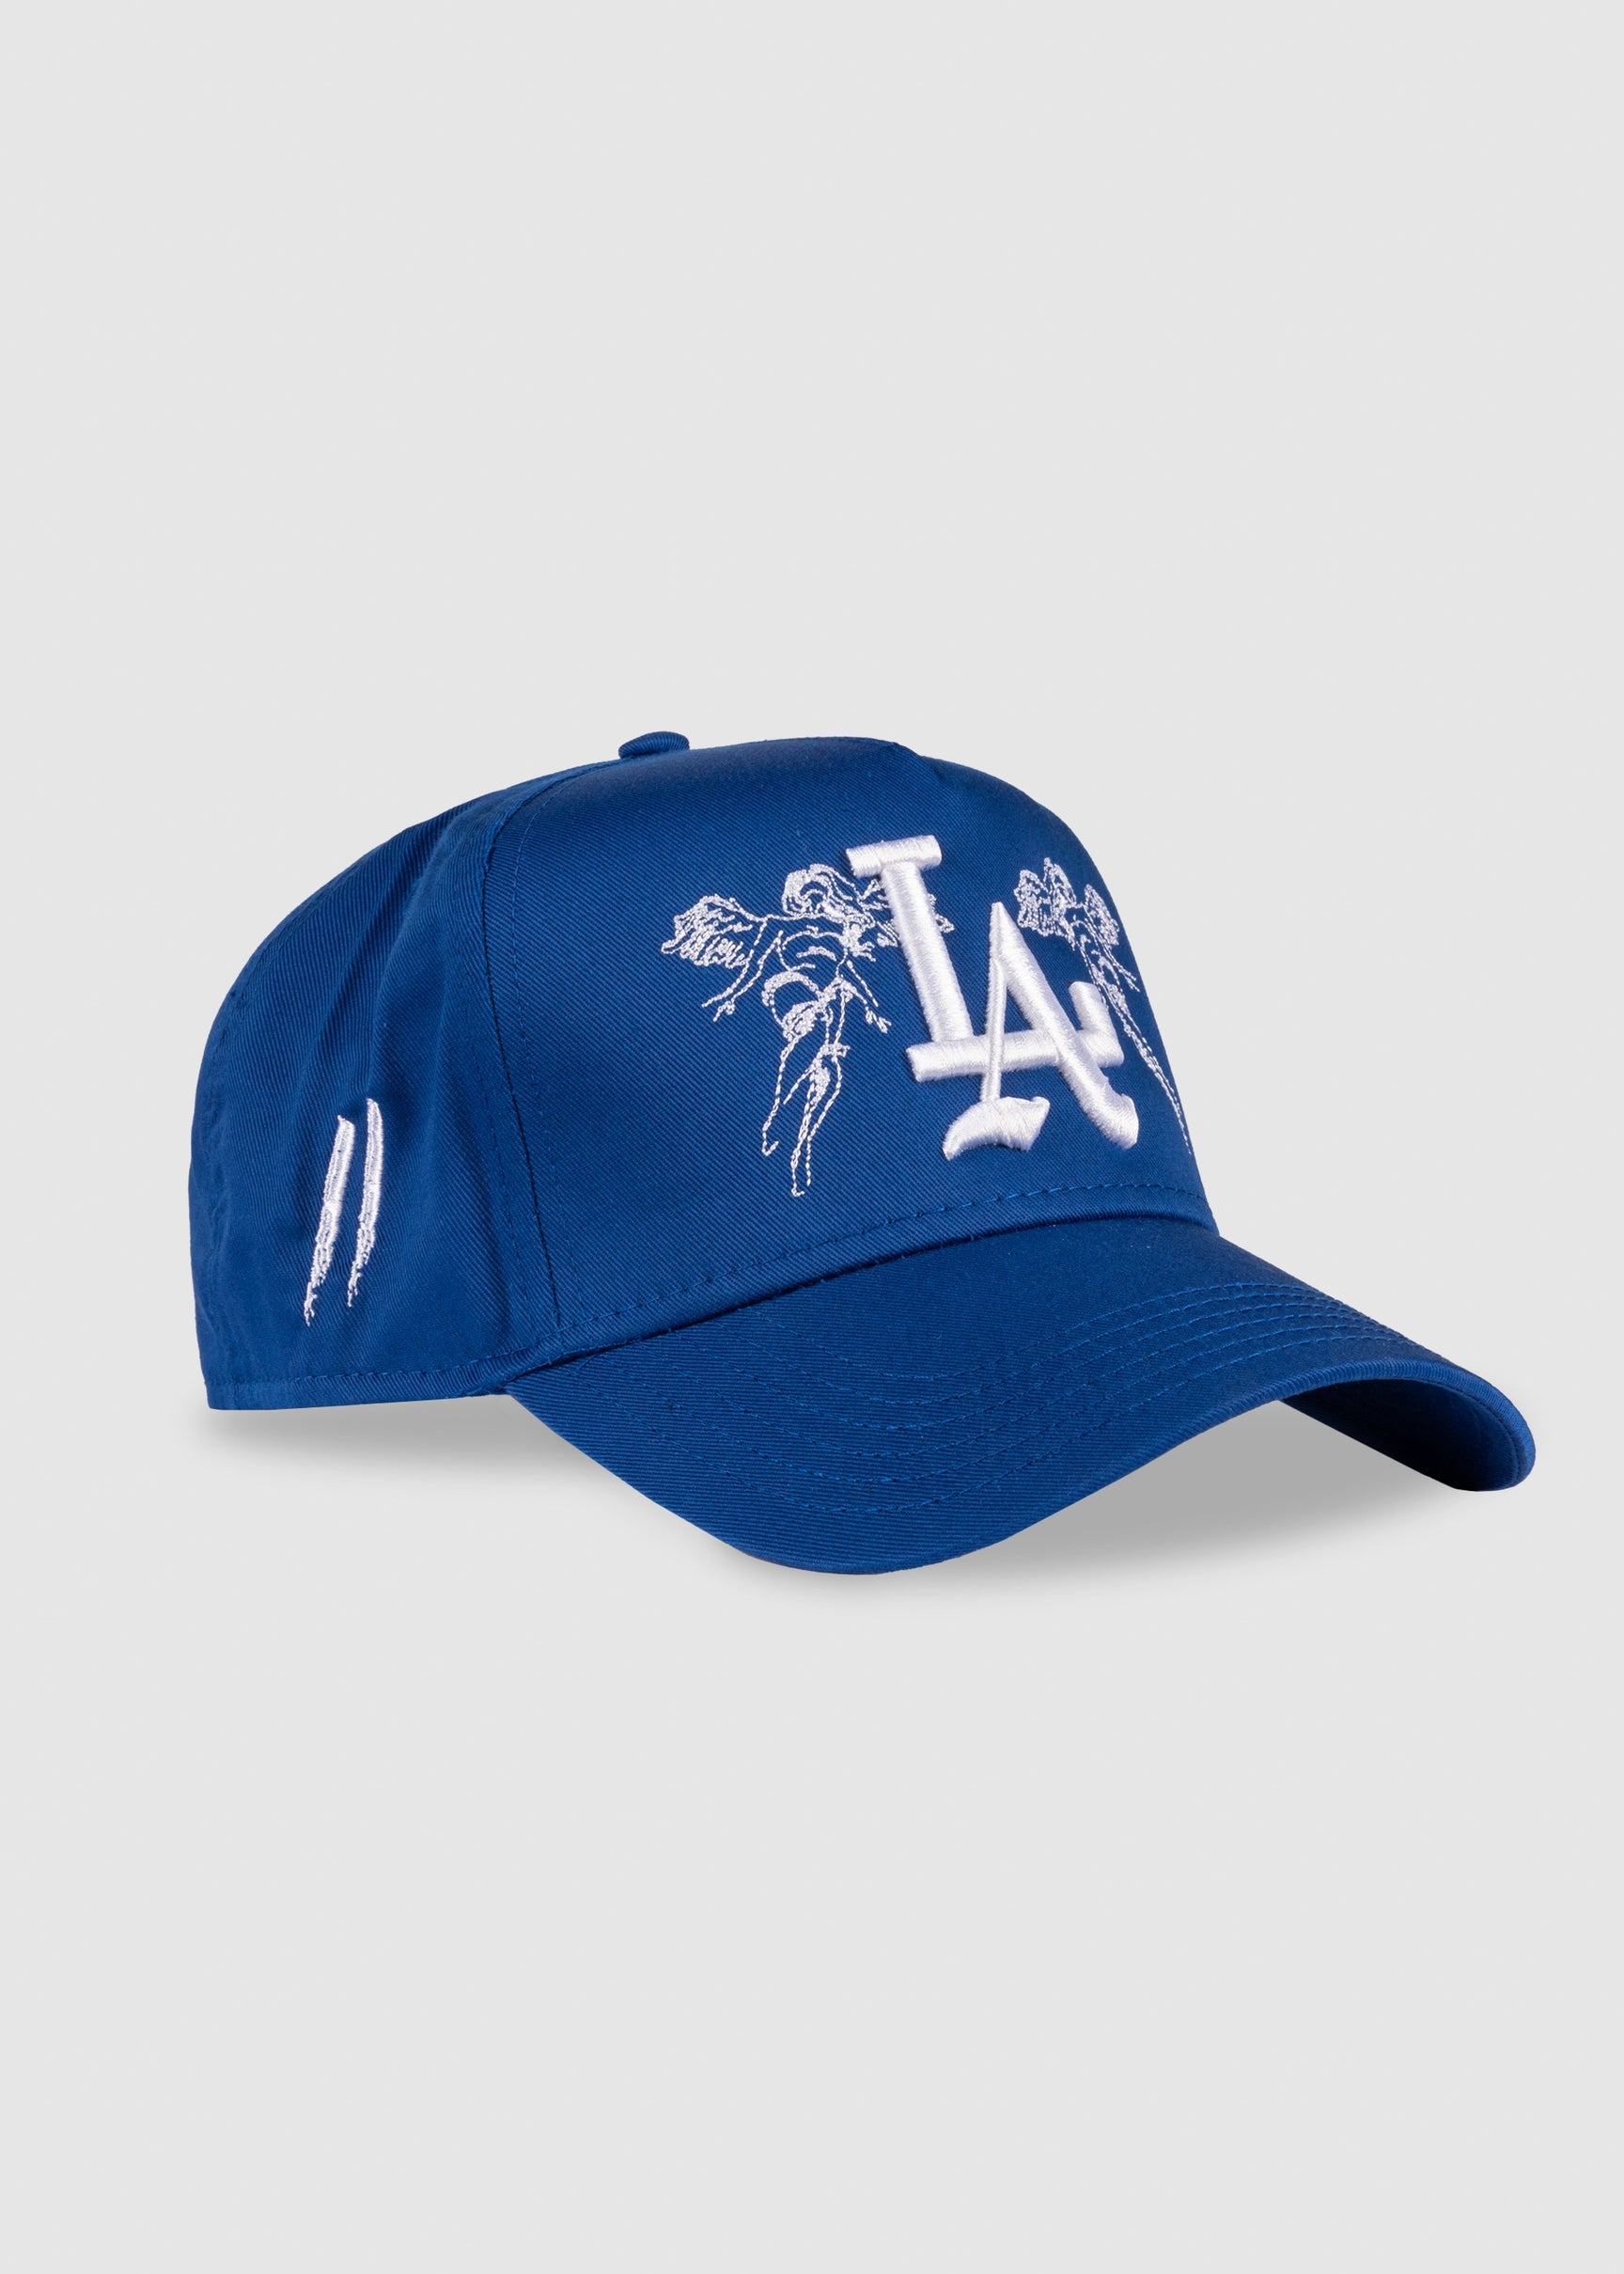 New Era Los Angeles Dodgers East LA Royal Tee